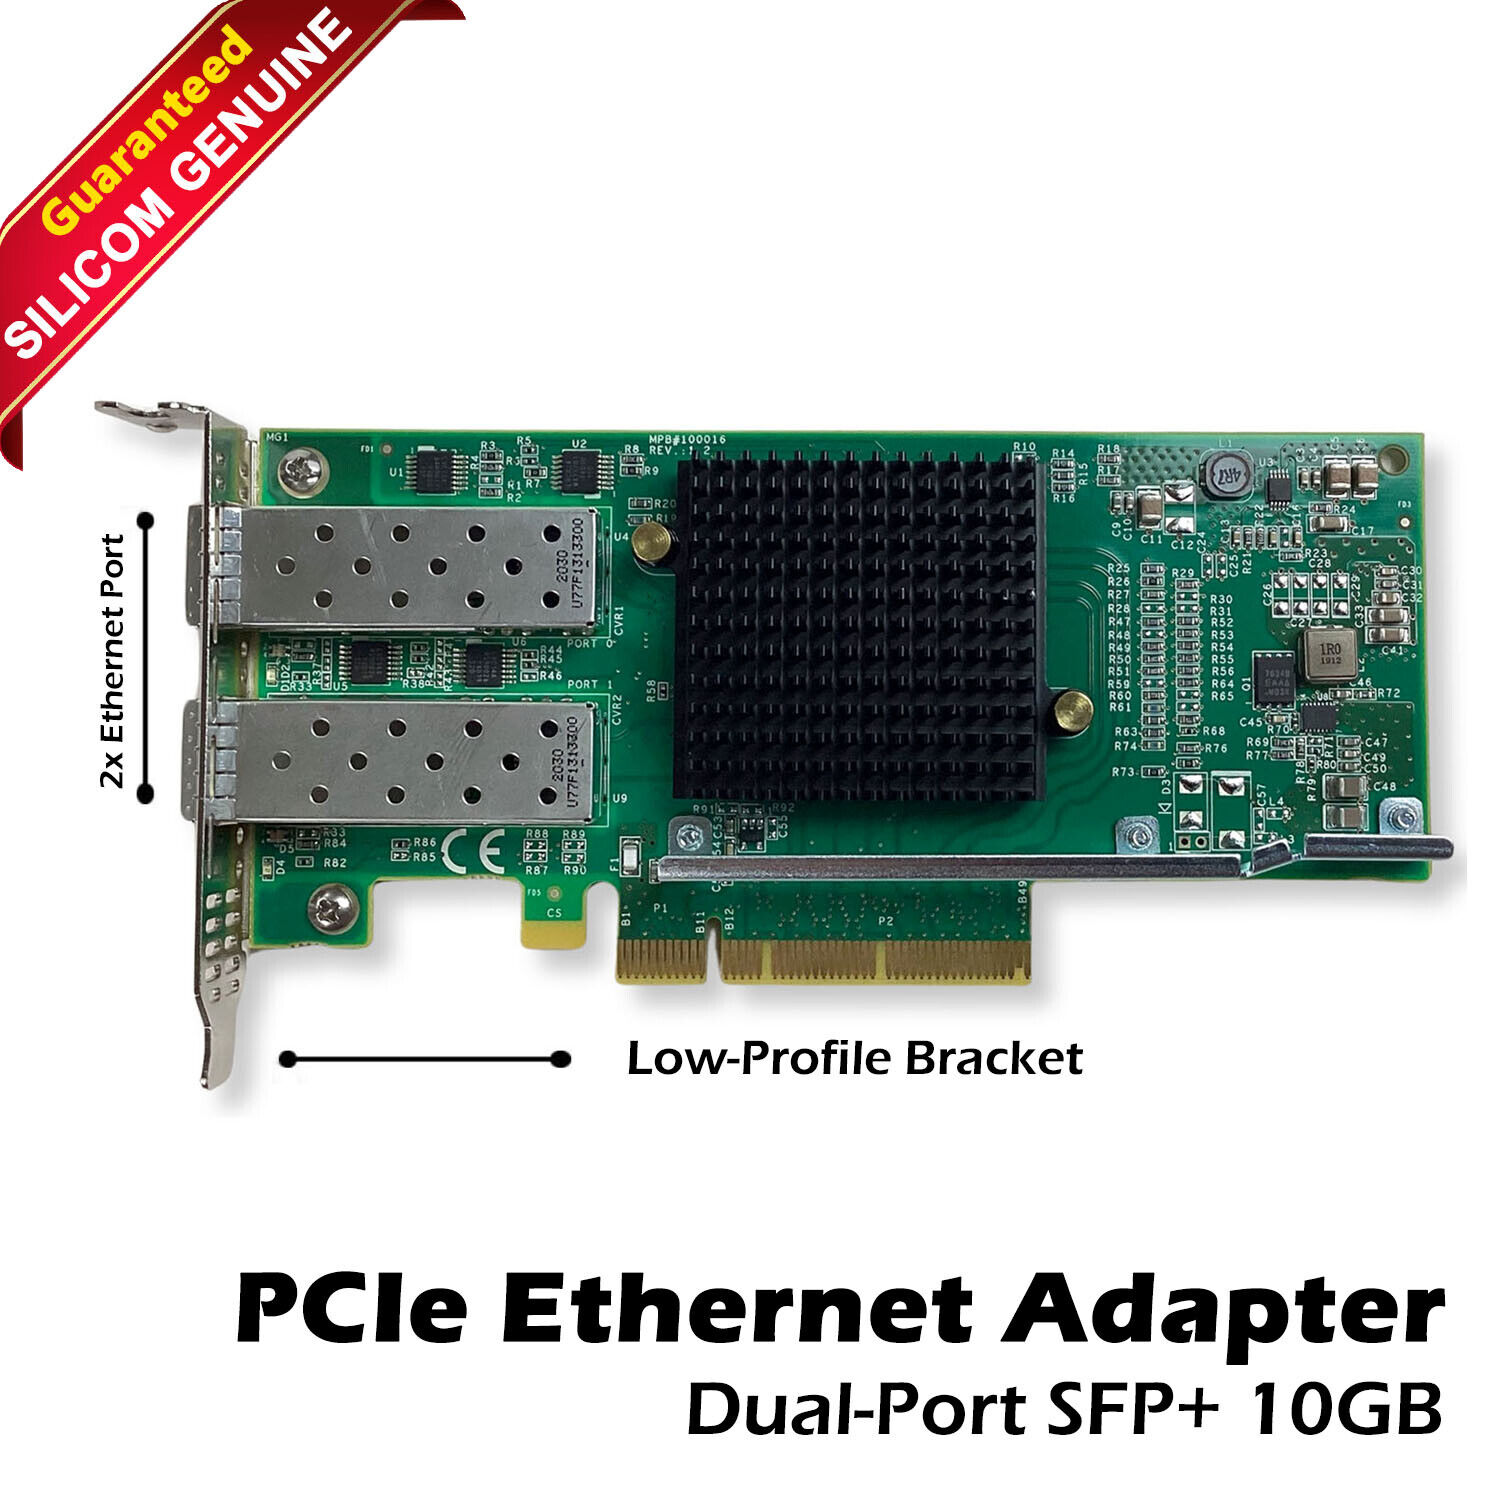 Silicom PE210G2SPI9AE-XR-NU 2-Port 10GbE SFP+ PCIe ADTR Intel X520 Low Profile